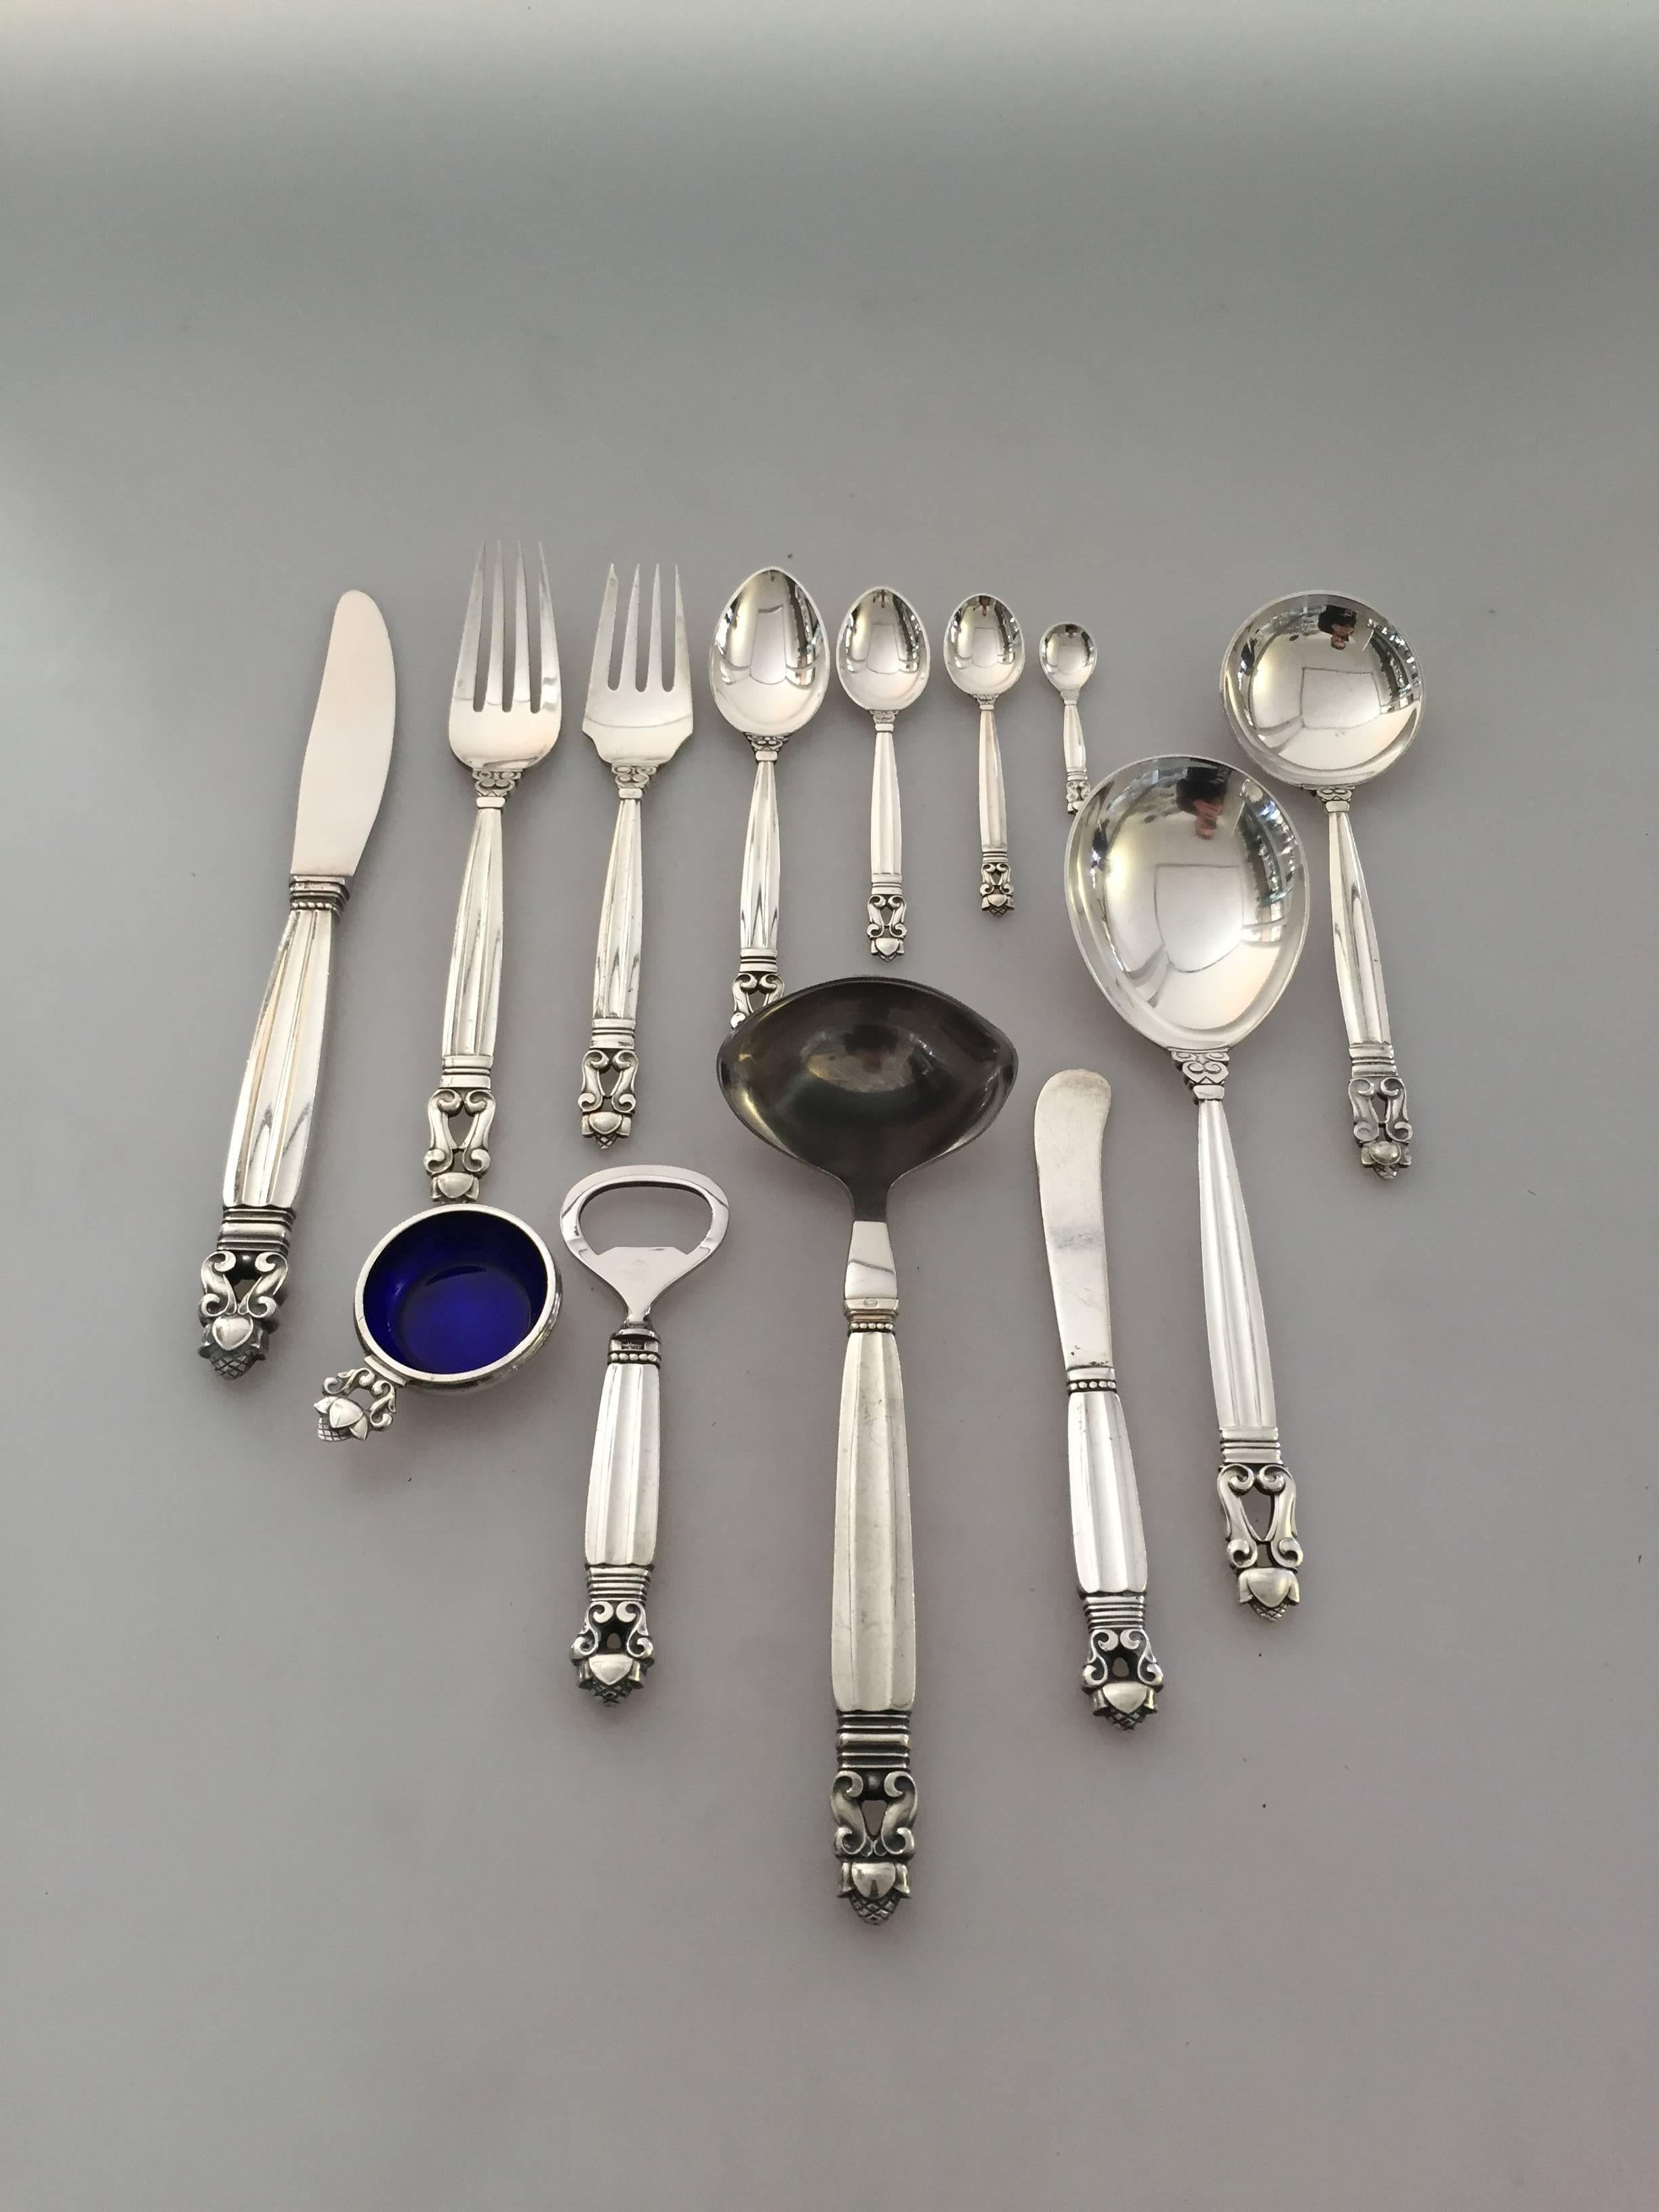 Georg Jensen sterling silver acorn set of 86 Pieces:

 Ten x knifes 20.5 cm.
Ten x forks 18.9 cm.
Ten x soup spoons 16 cm.
Ten x salad forks 16.7 cm.
Ten x butter knifes all sterling 14.8 cm.
Ten x slender fruit spoons 15 cm.
Ten x coffee